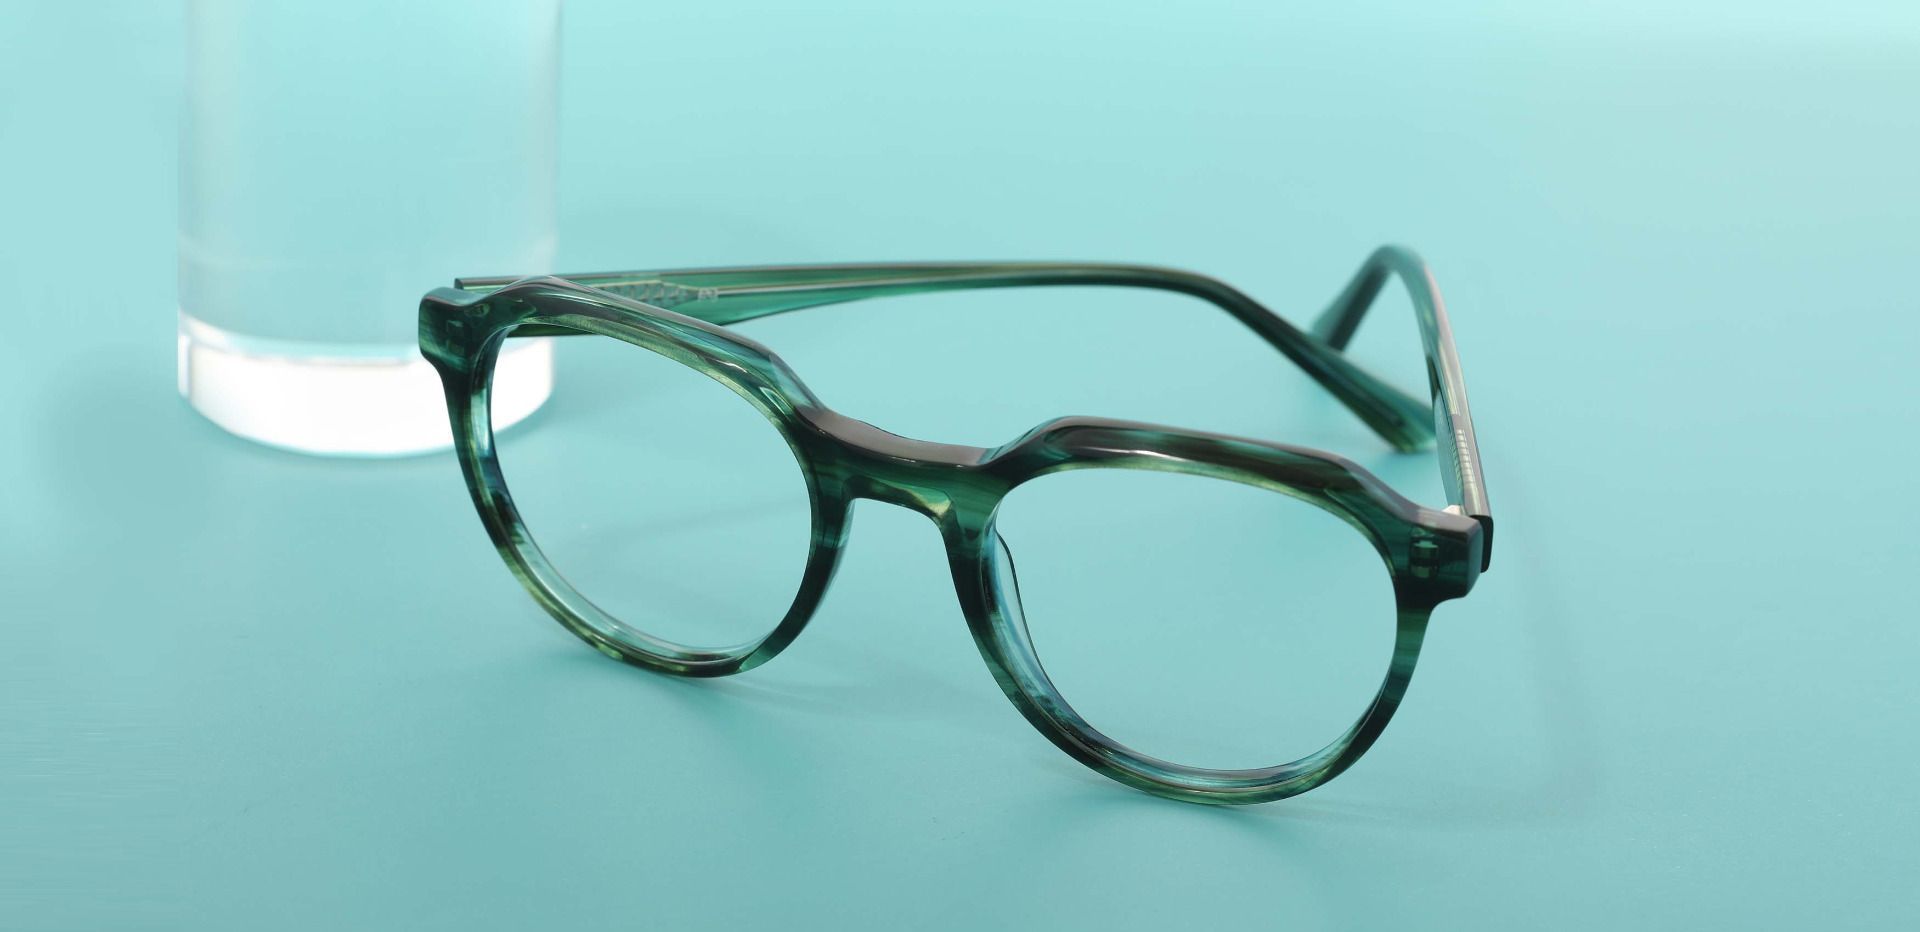 Alfalfa Oval Lined Bifocal Glasses - Green